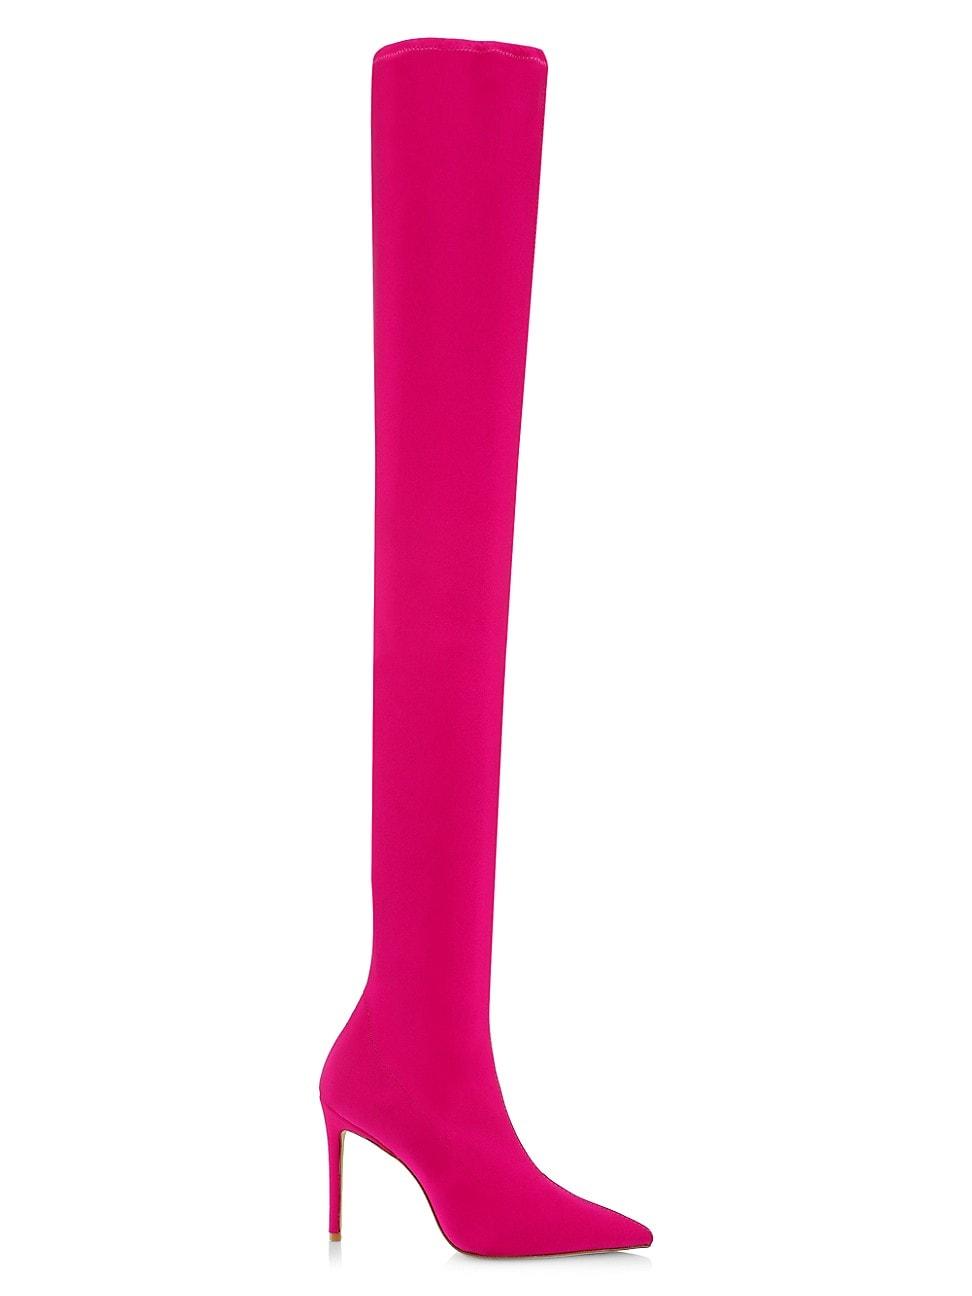 Stuart Weitzman Ultrastuart Satin Thigh-high Boots in Magenta (Pink) | Lyst